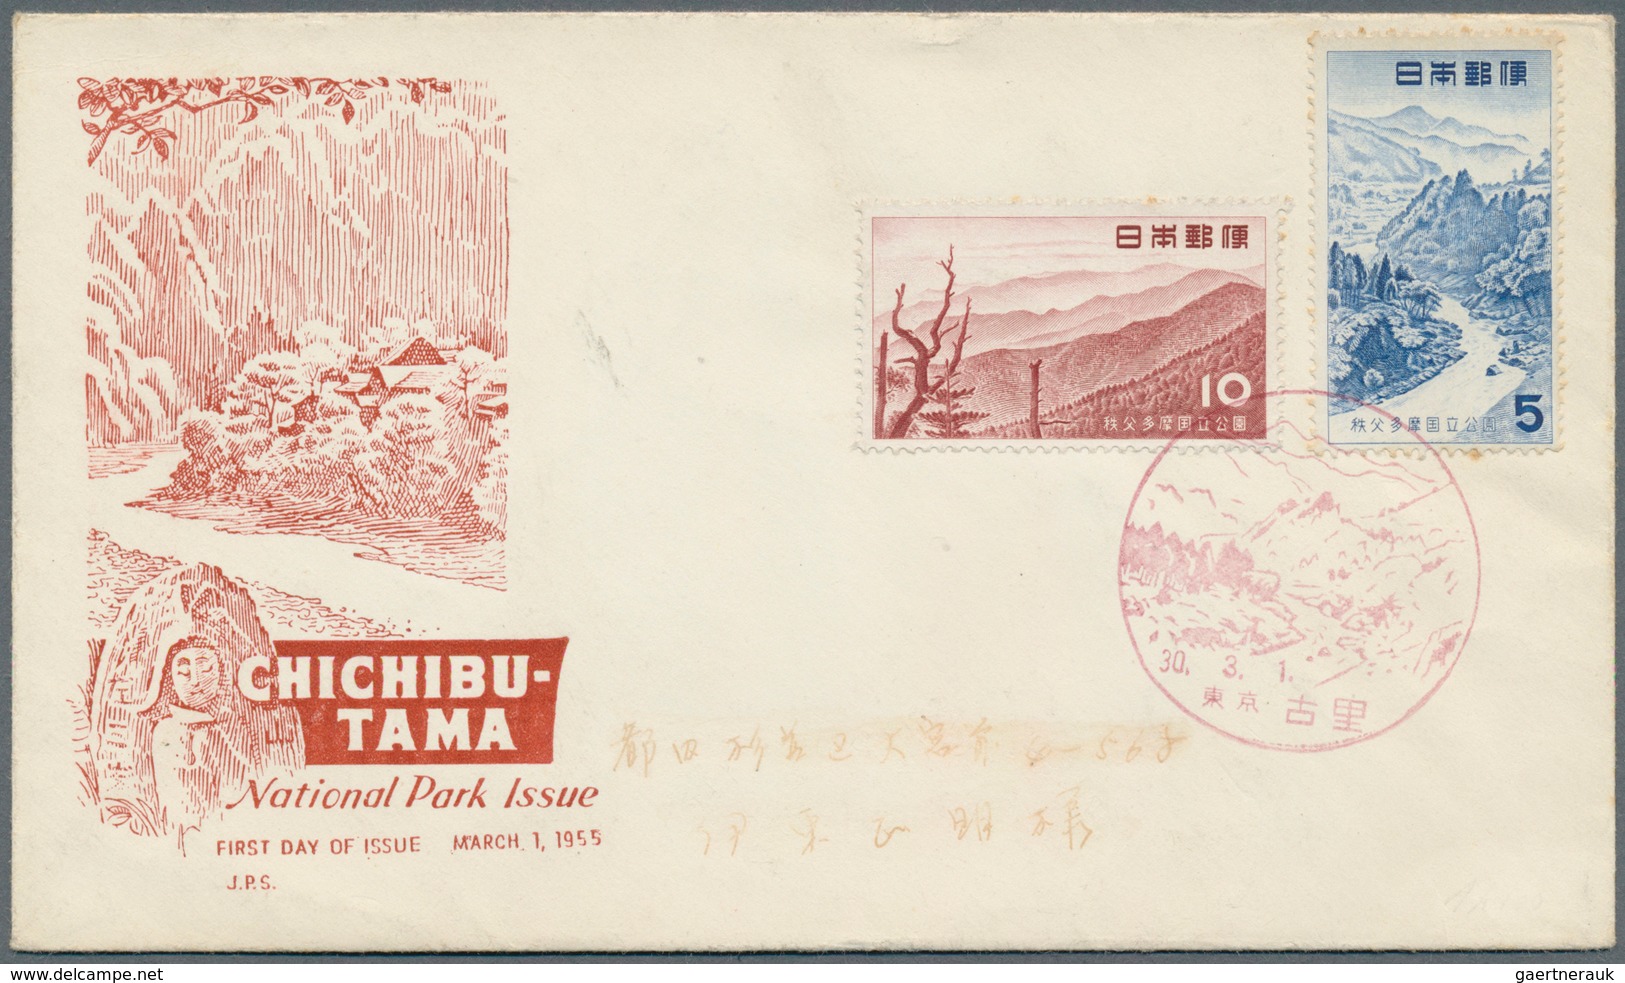 22898 Japan: 1874/1960, appr. 58 used/few mint stationery, ppc, FDC inc. a large size 3 S. kiku envelope u